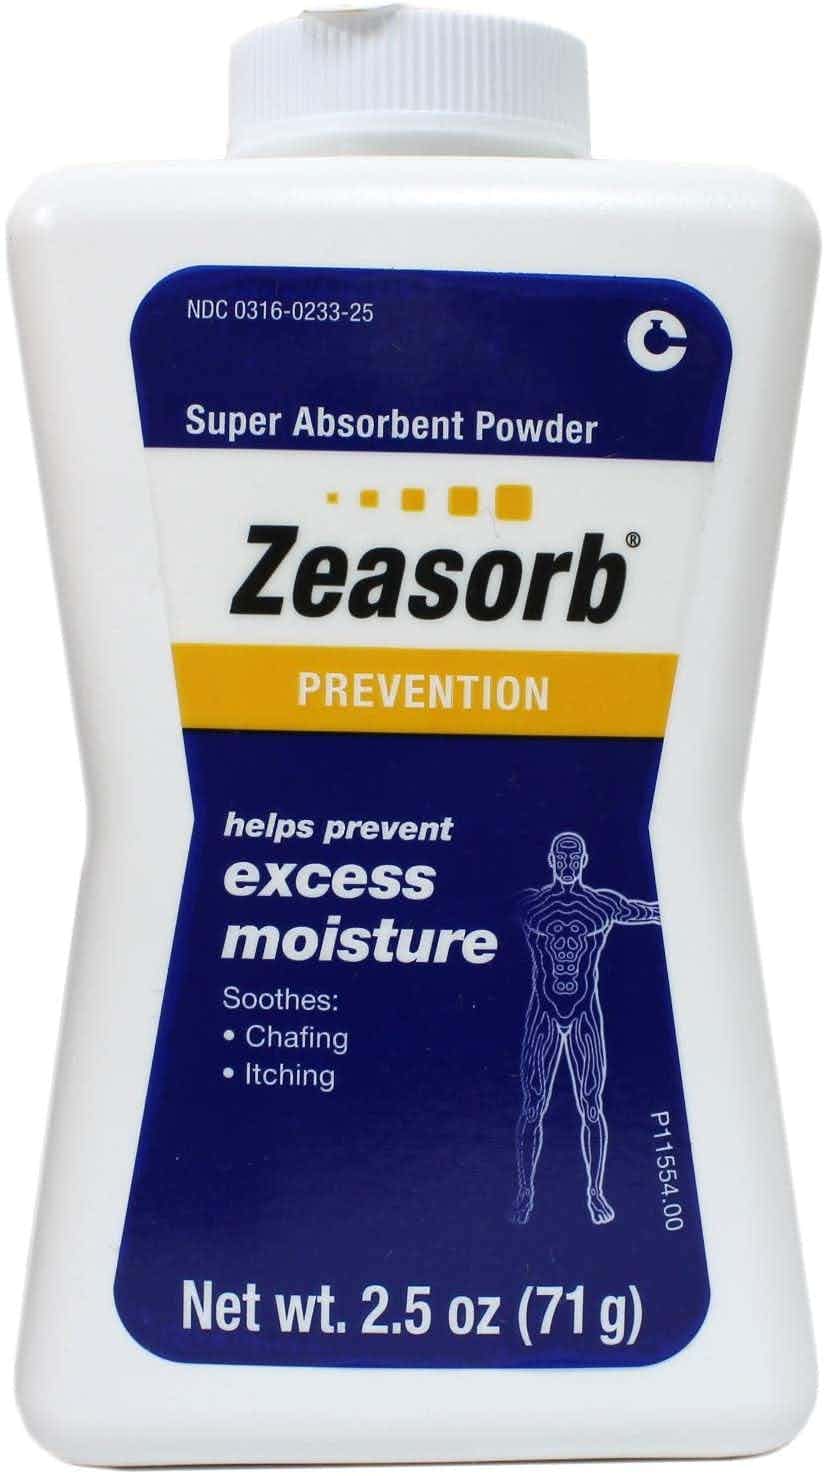 Zeasorb Prevention Super Absorbent Powder, 2.5 oz., 30316023325, 1 Each